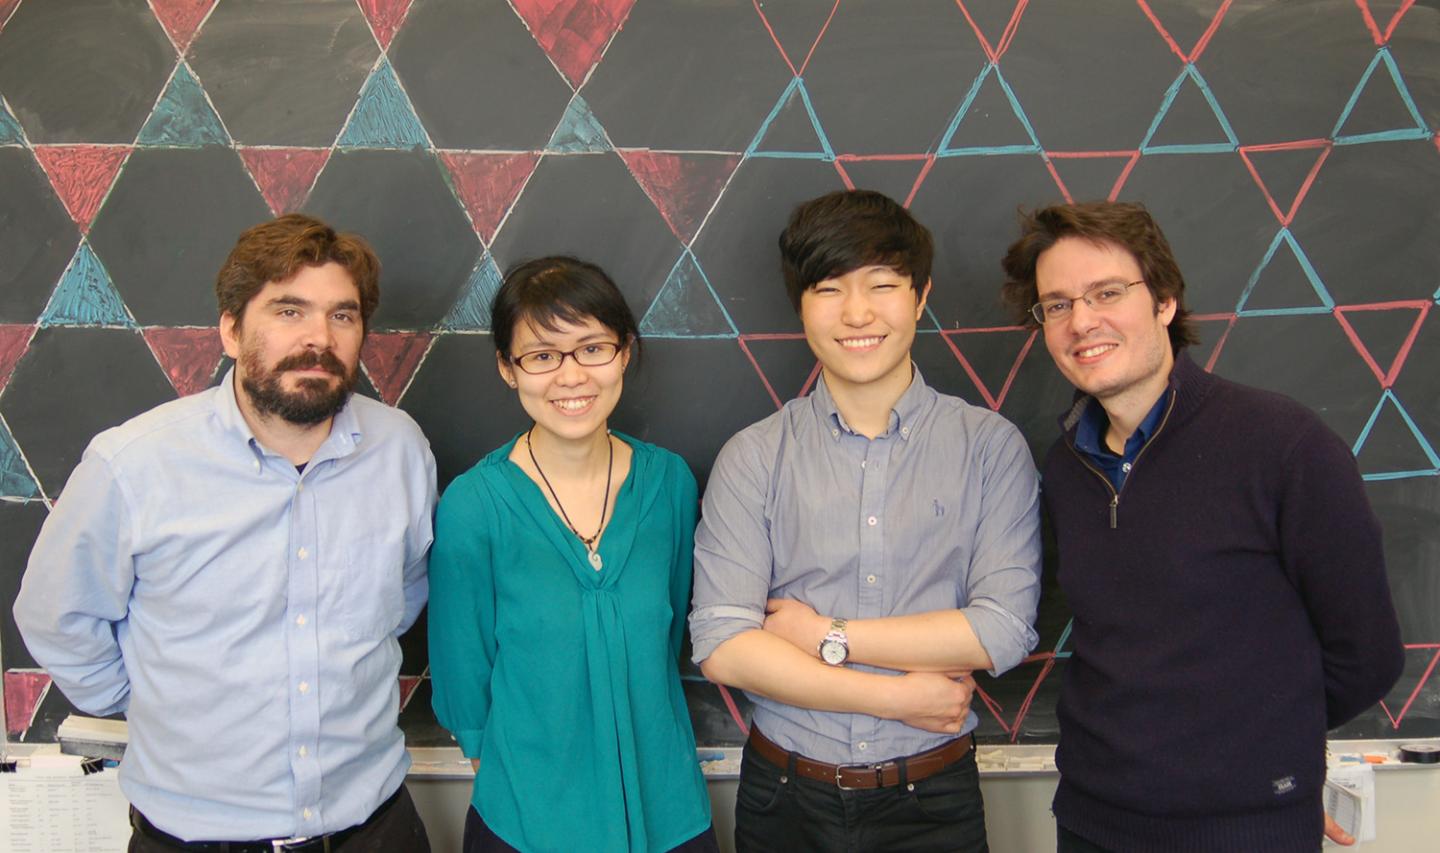 Prof. Linda Ye, Caltech: Lattice-driven flat bands in quantum materials 